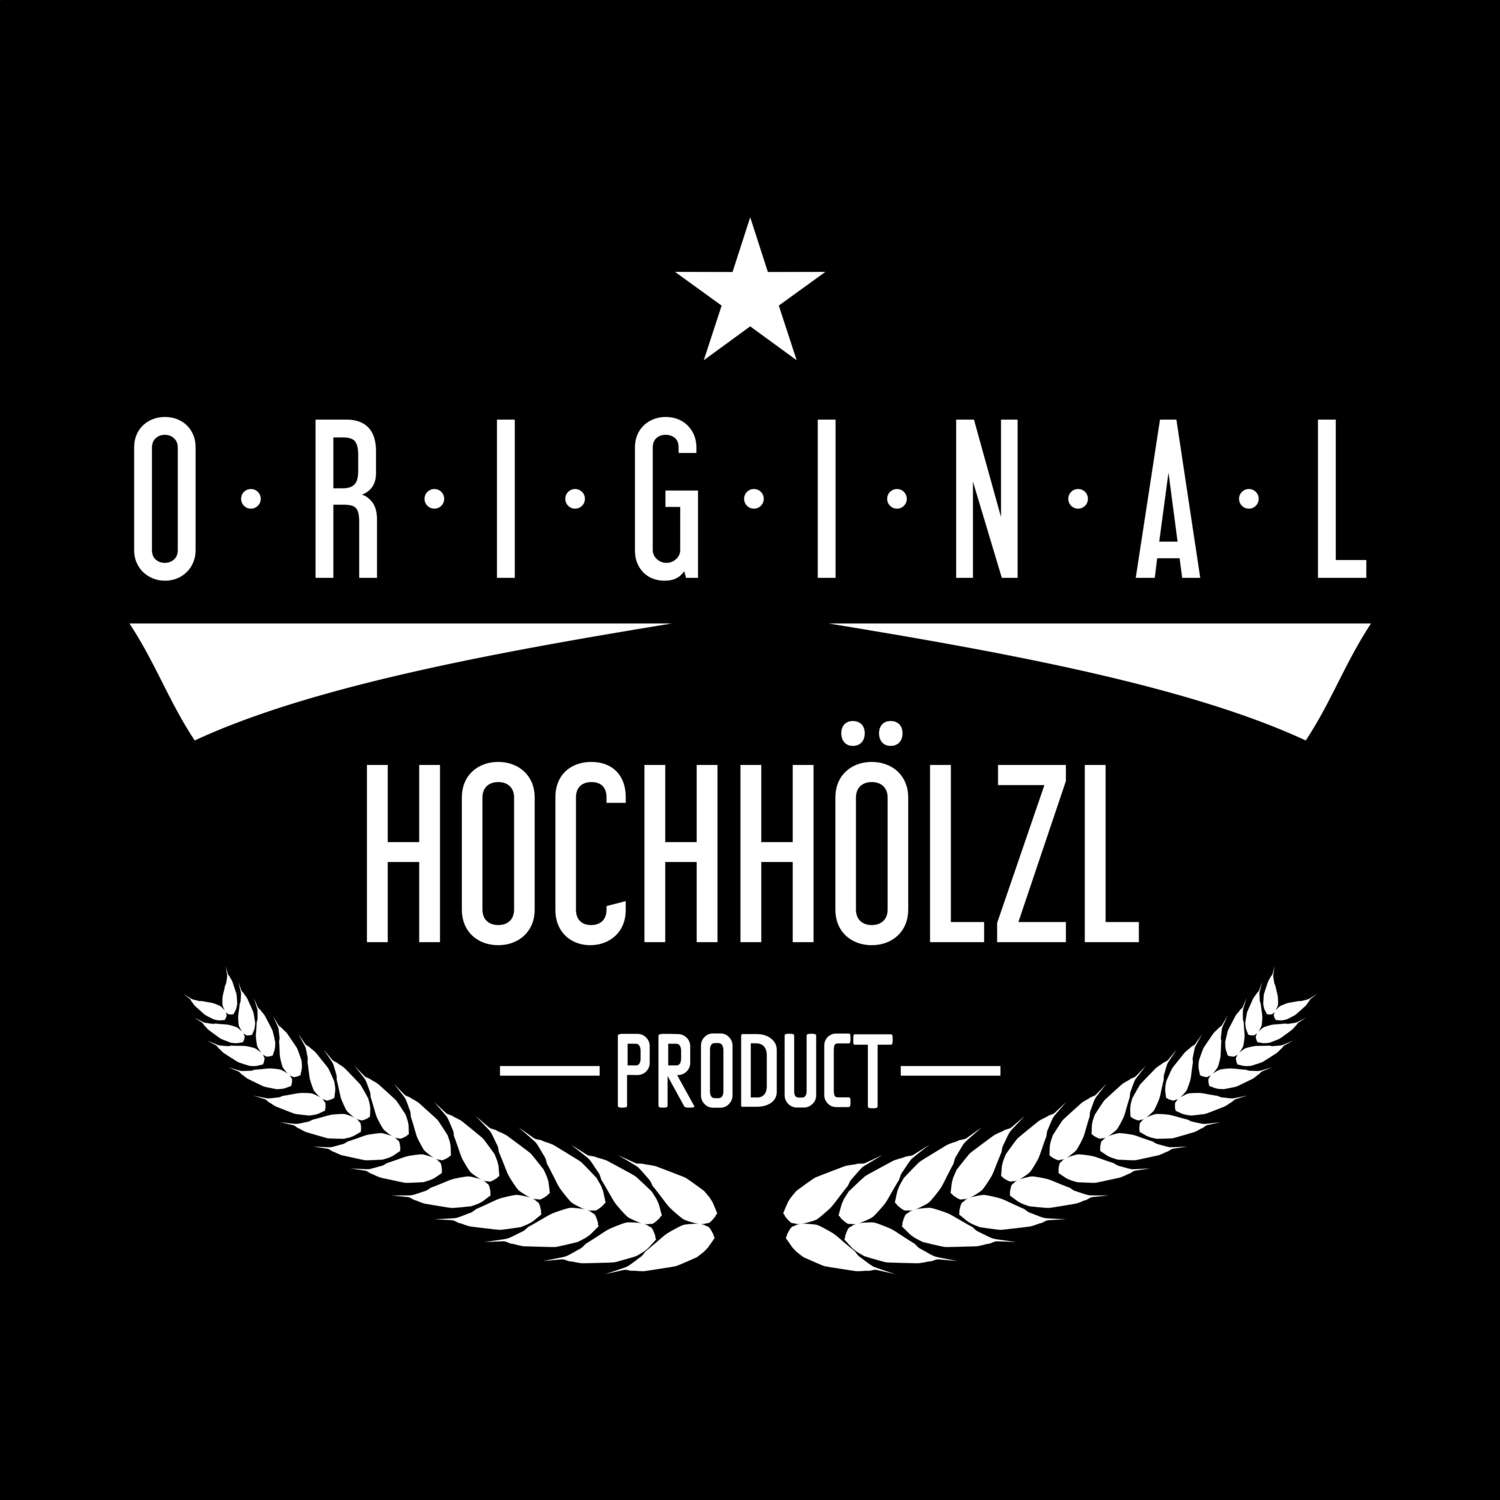 Hochhölzl T-Shirt »Original Product«